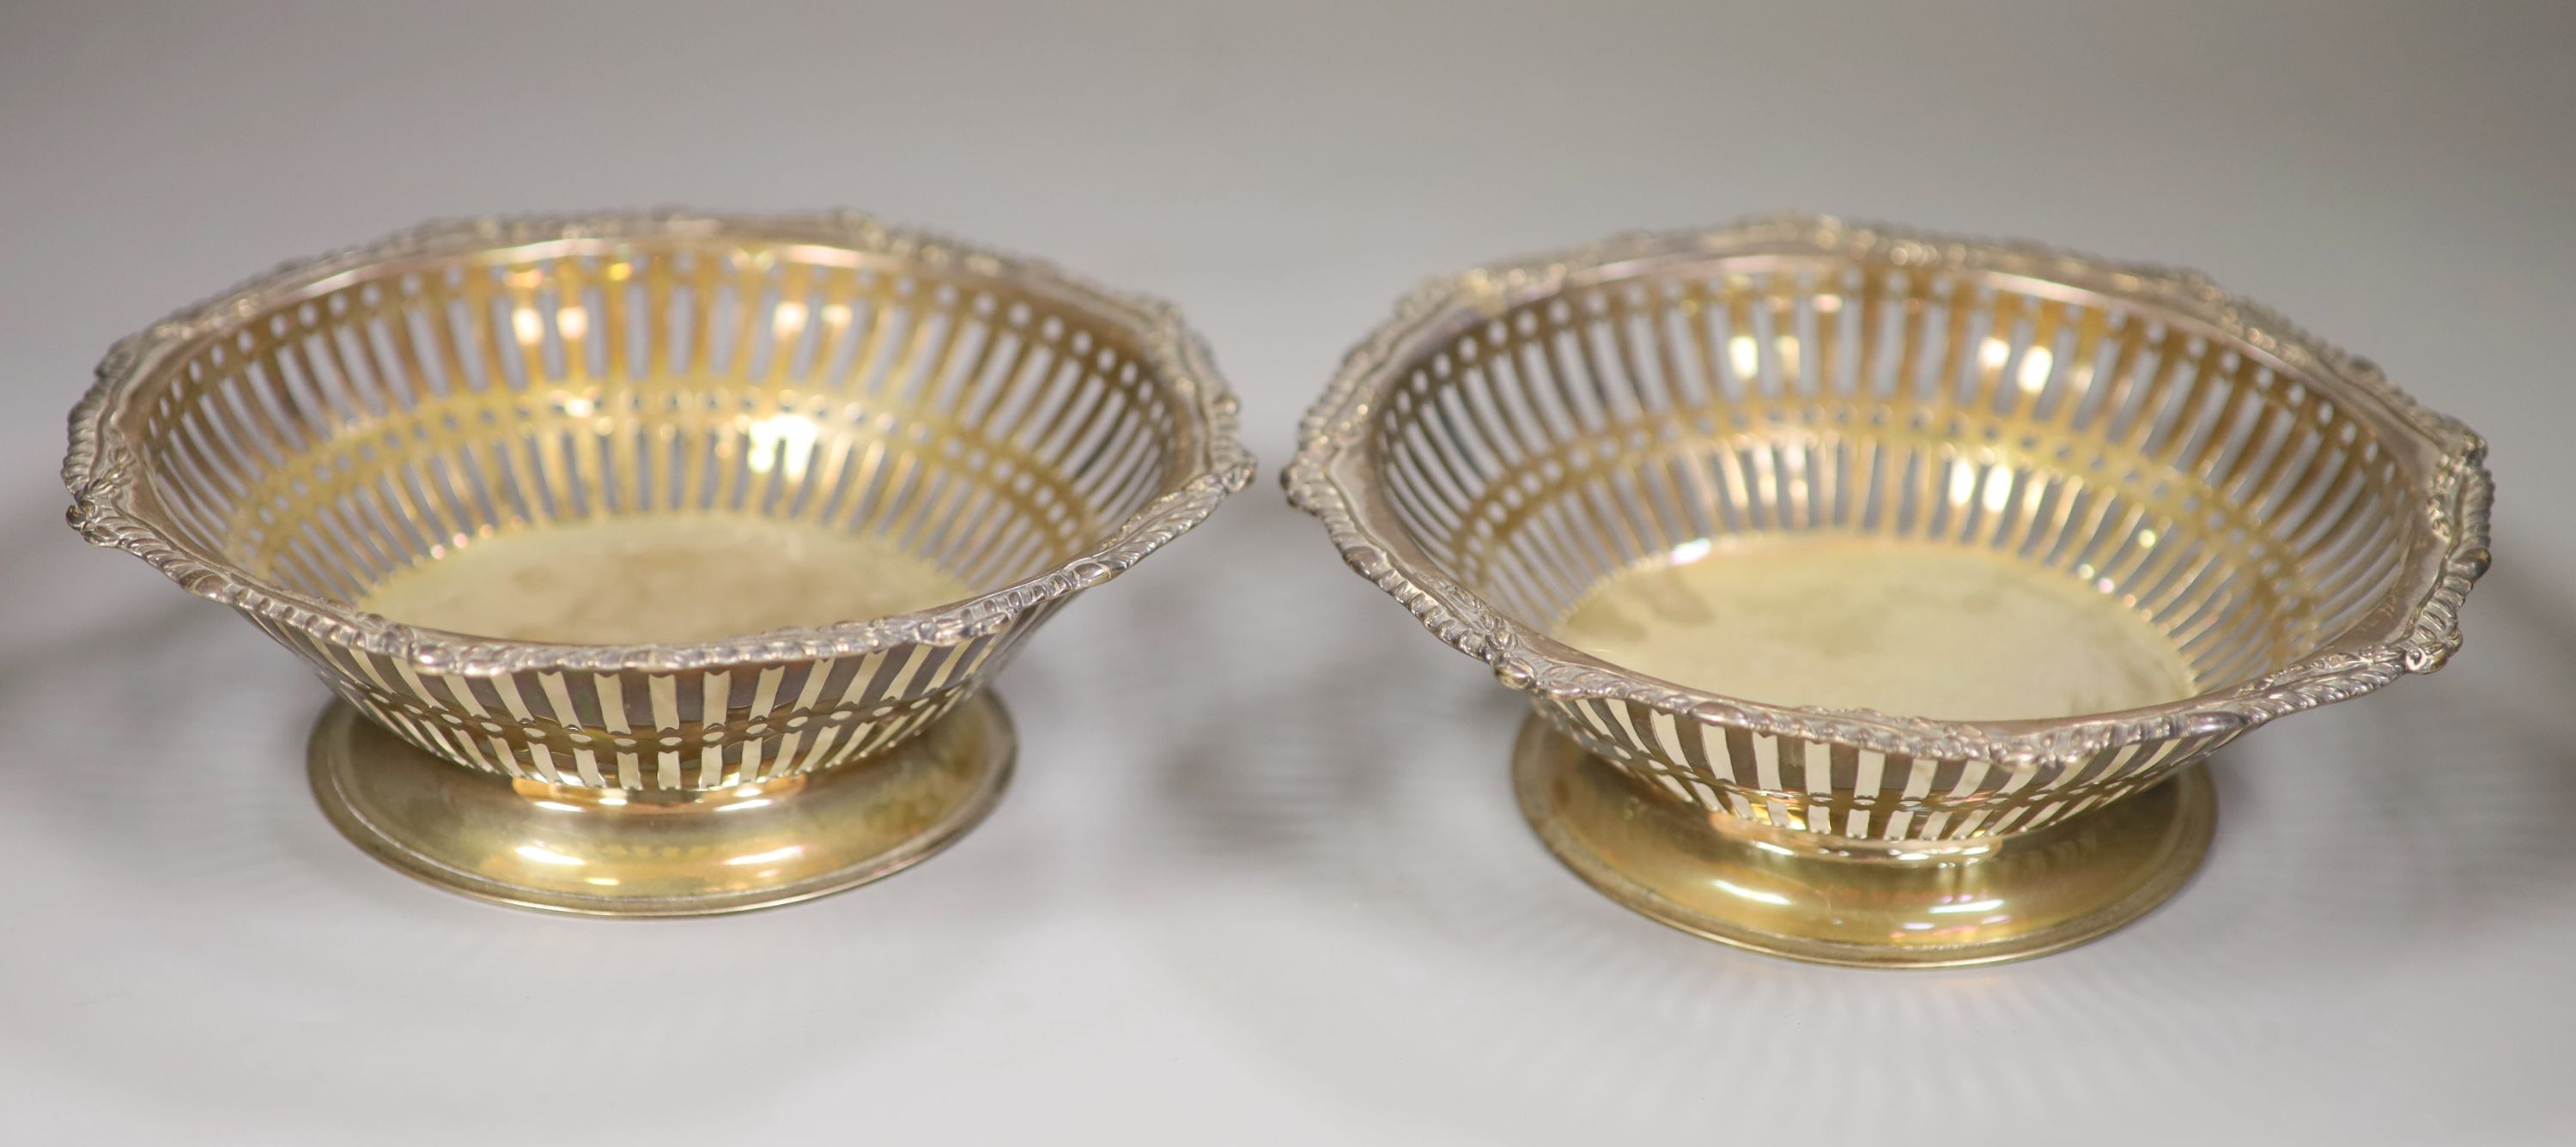 A pair of Edwardian pierced silver shallow bowls, Elkington & Co, Sheffield 1901, diameter 20.4cm, gross 20oz.